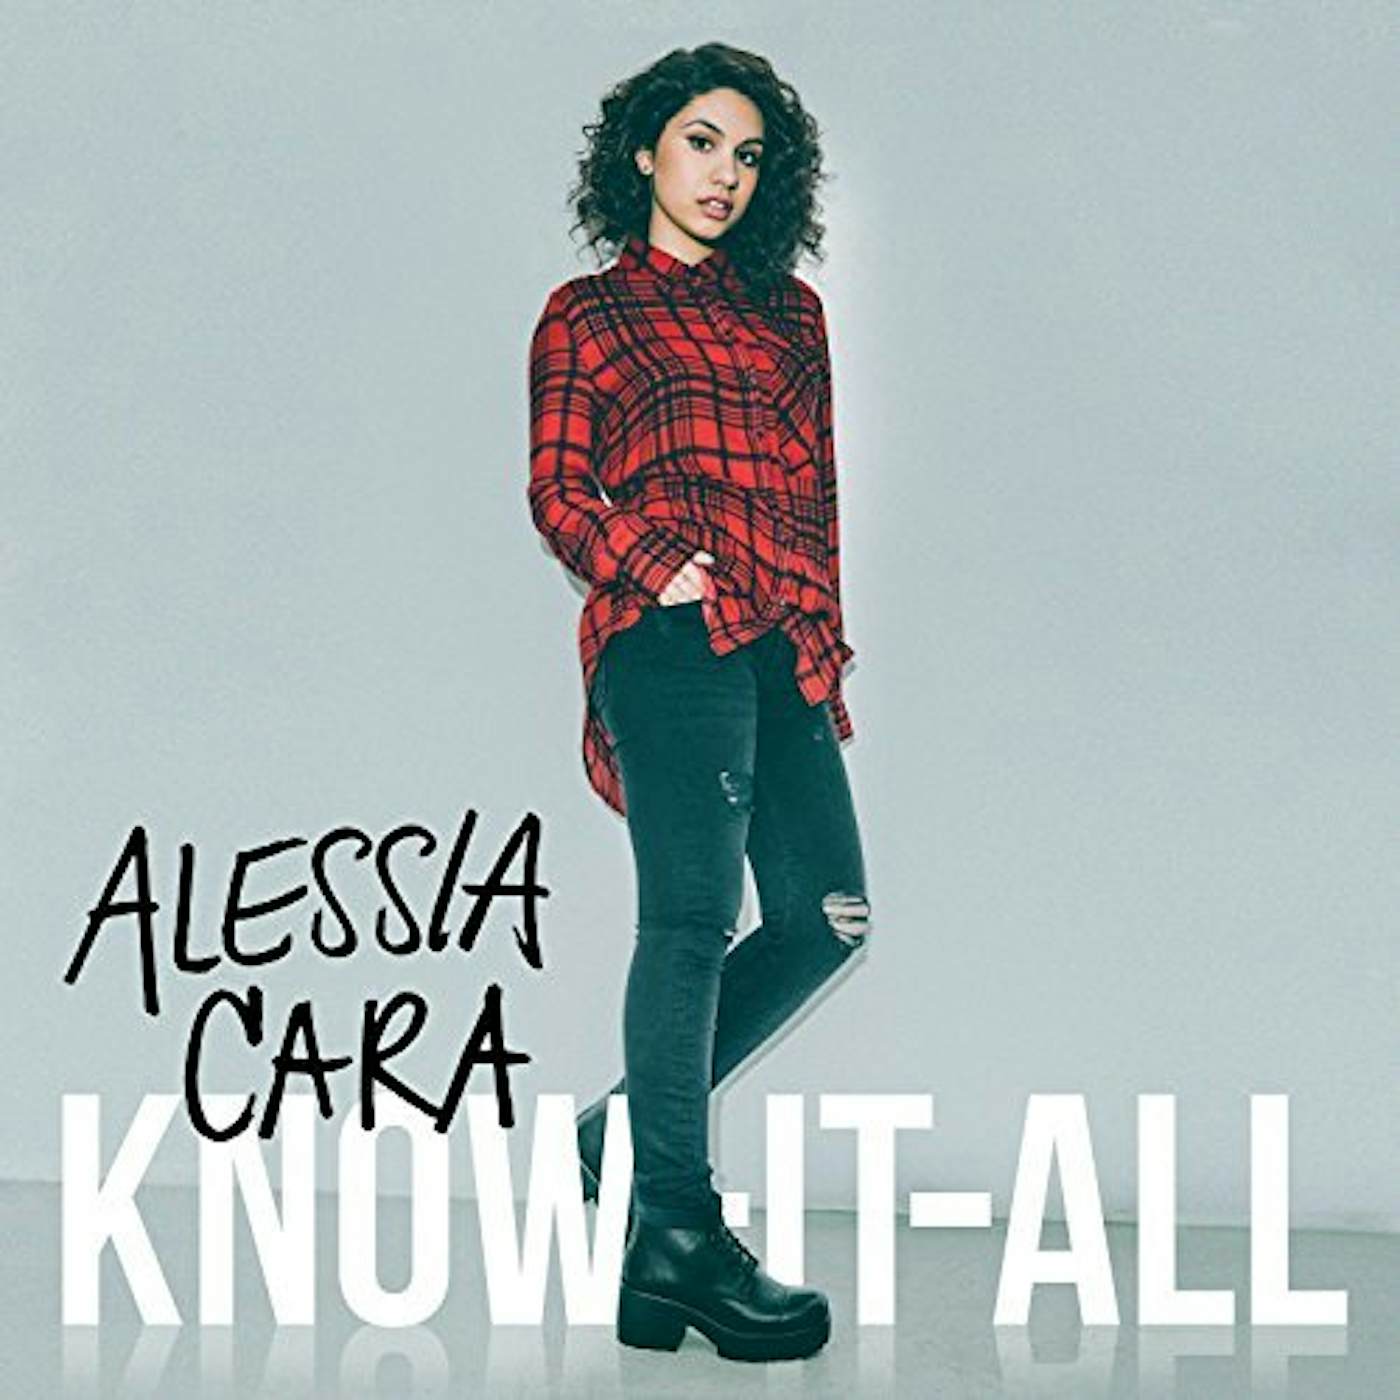 Alessia Cara KNOW IT ALL Vinyl Record